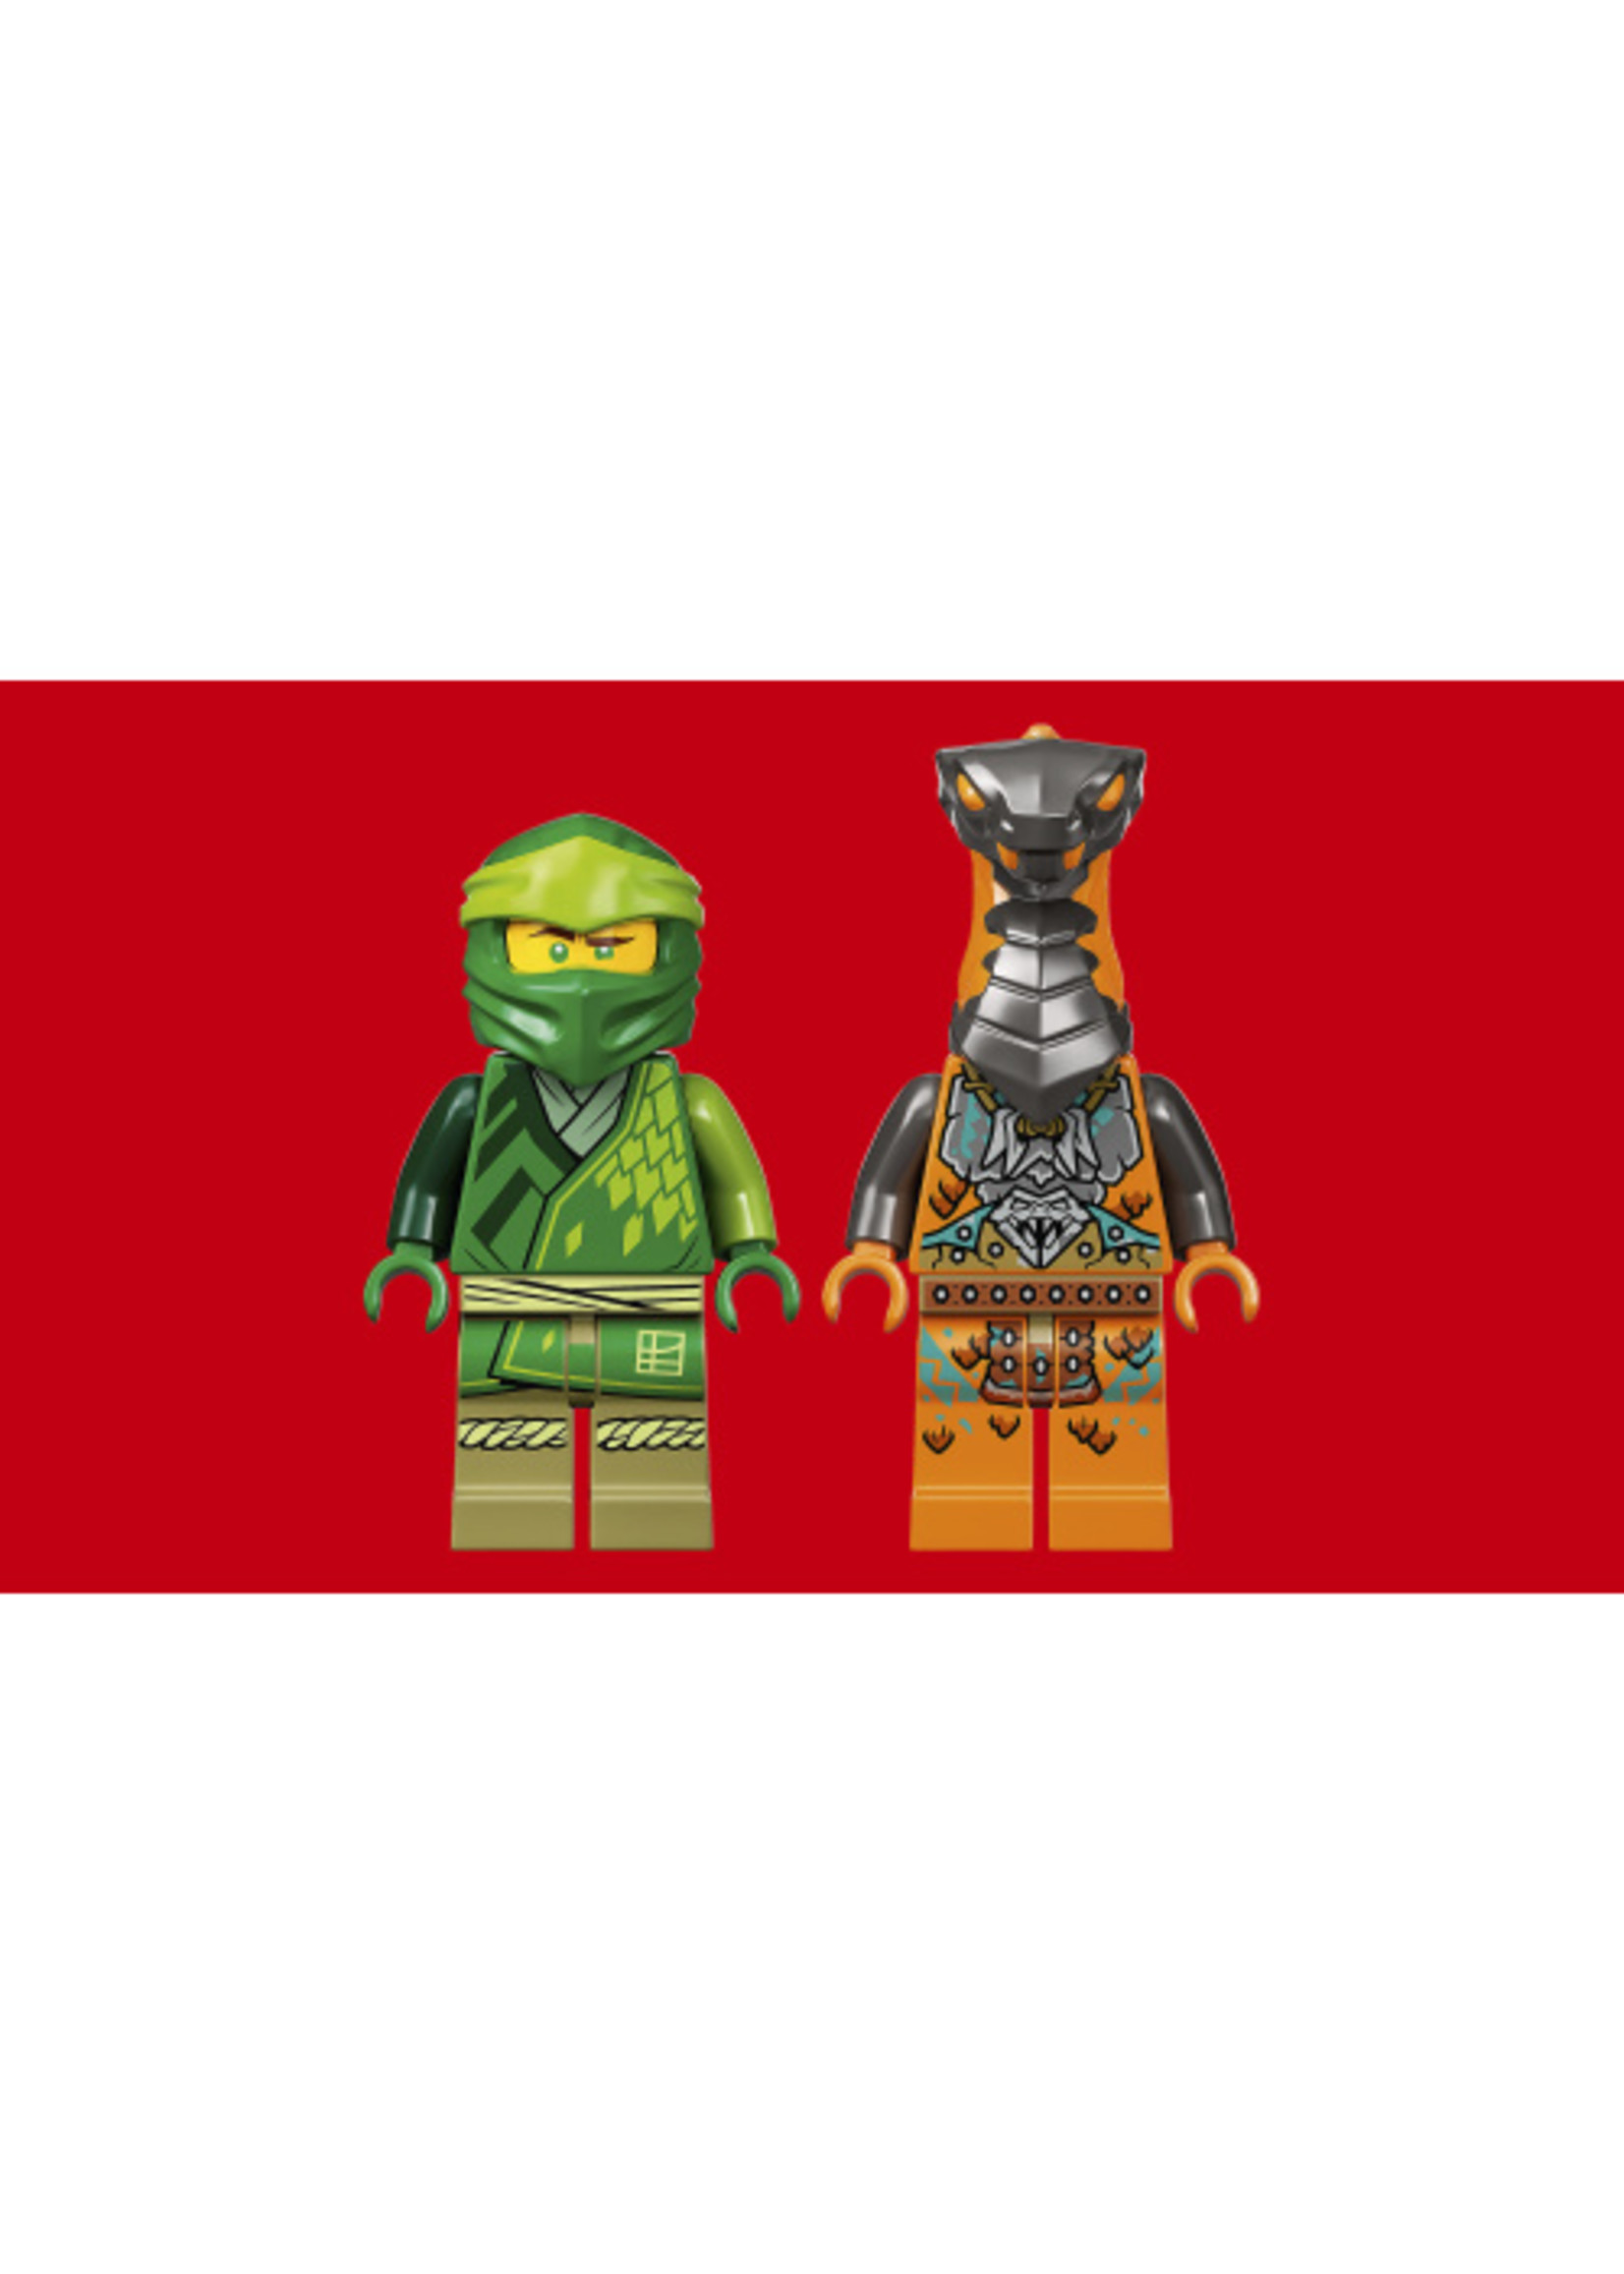 LEGO 71757 - Lloyd's Ninja Mech